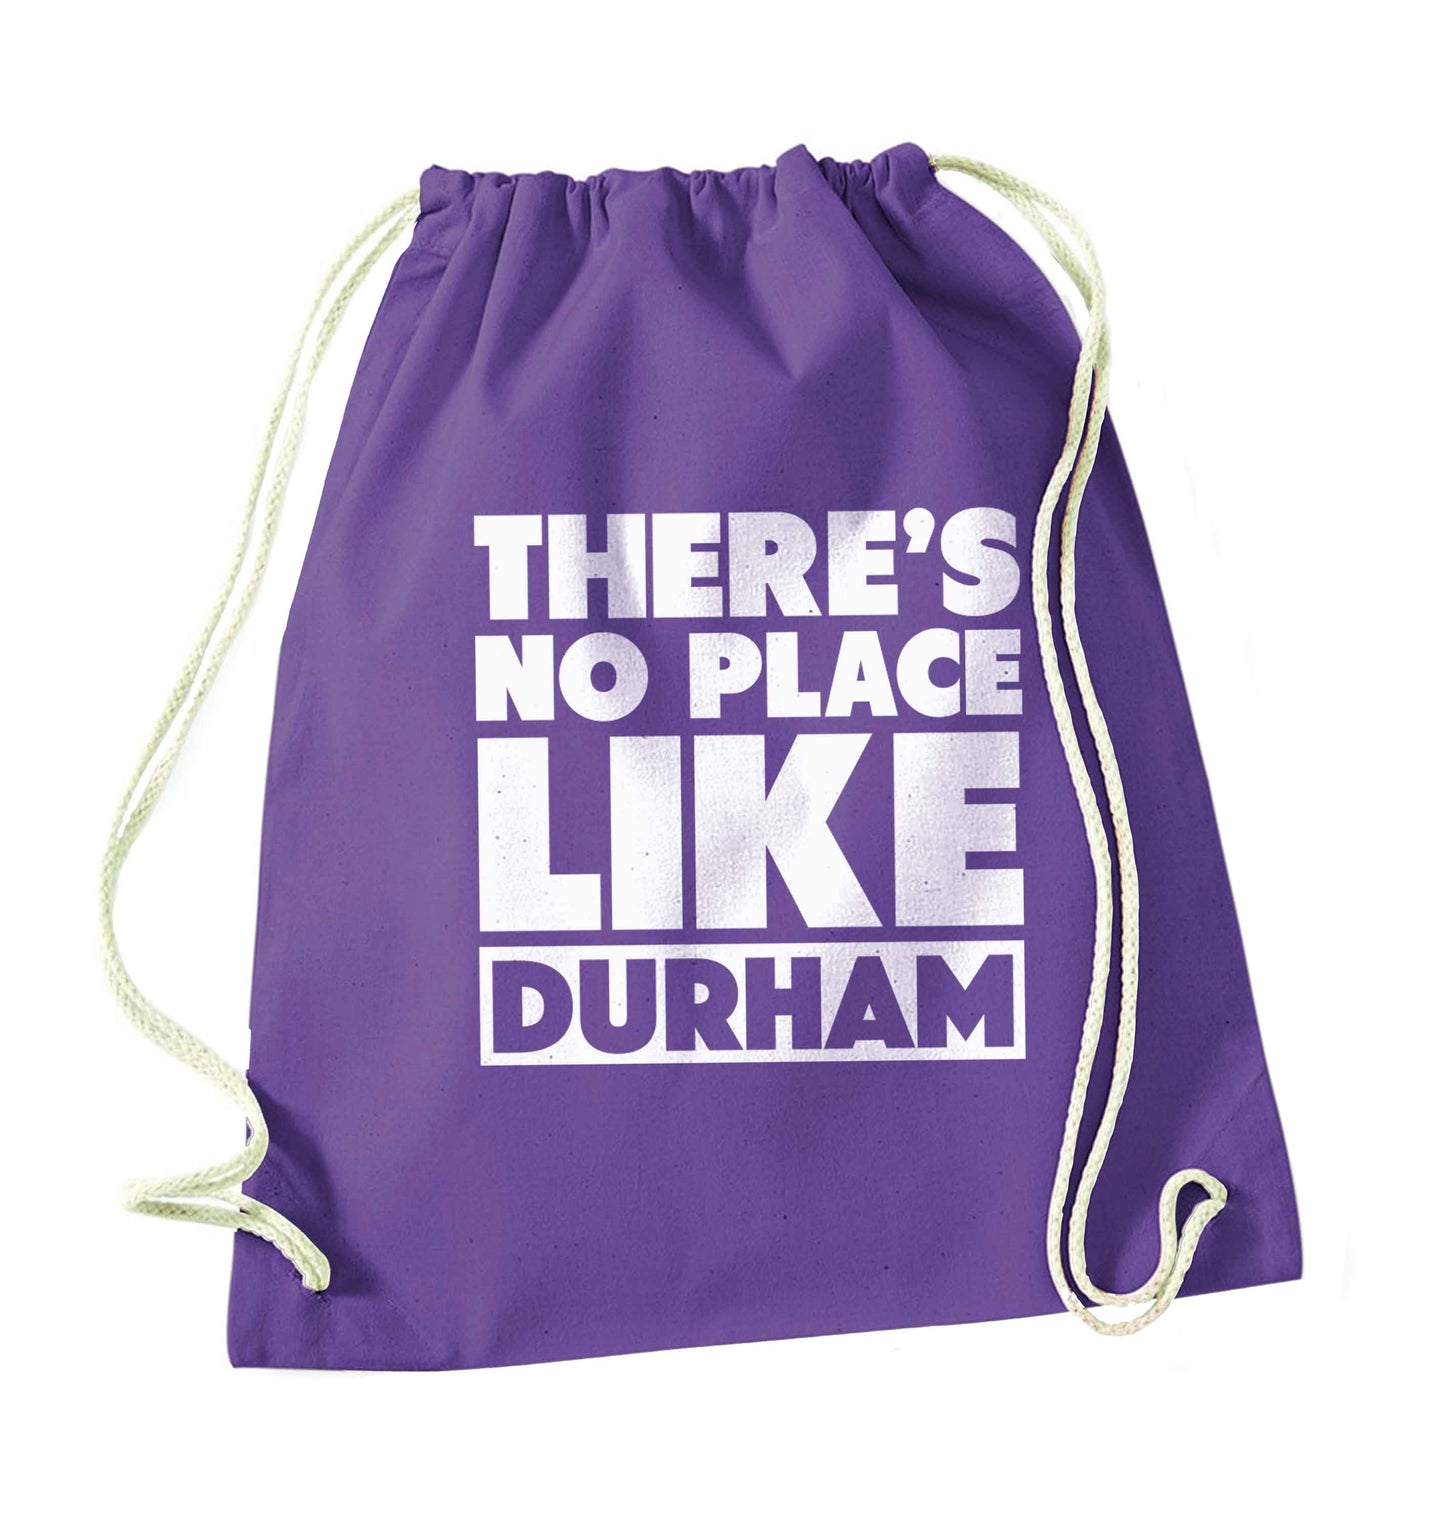 There's no place like Durham purple drawstring bag